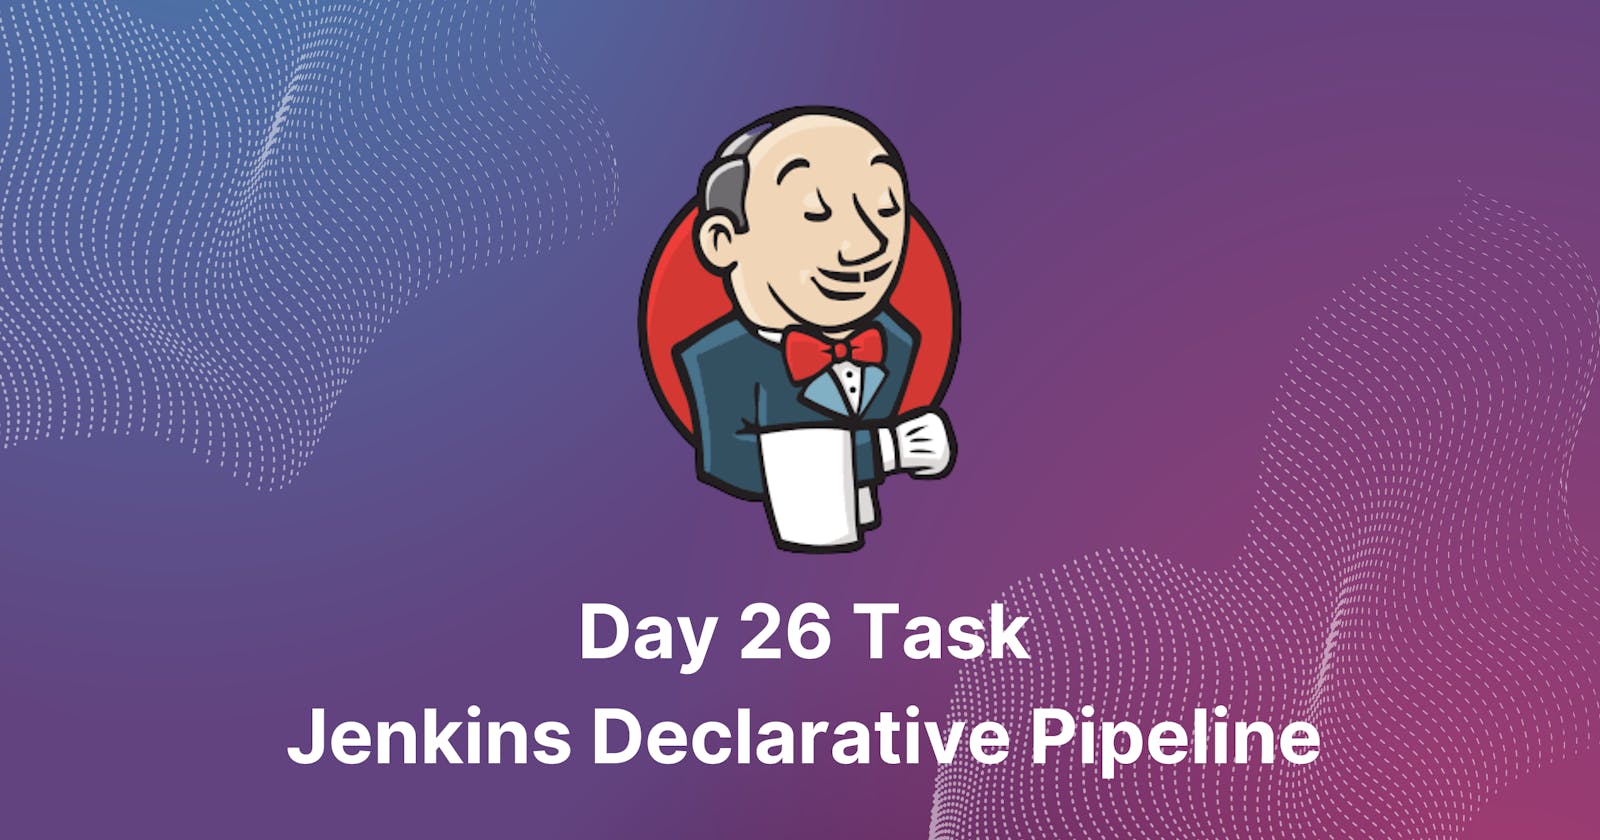 ❄️Day 26 - Jenkins Declarative Pipeline